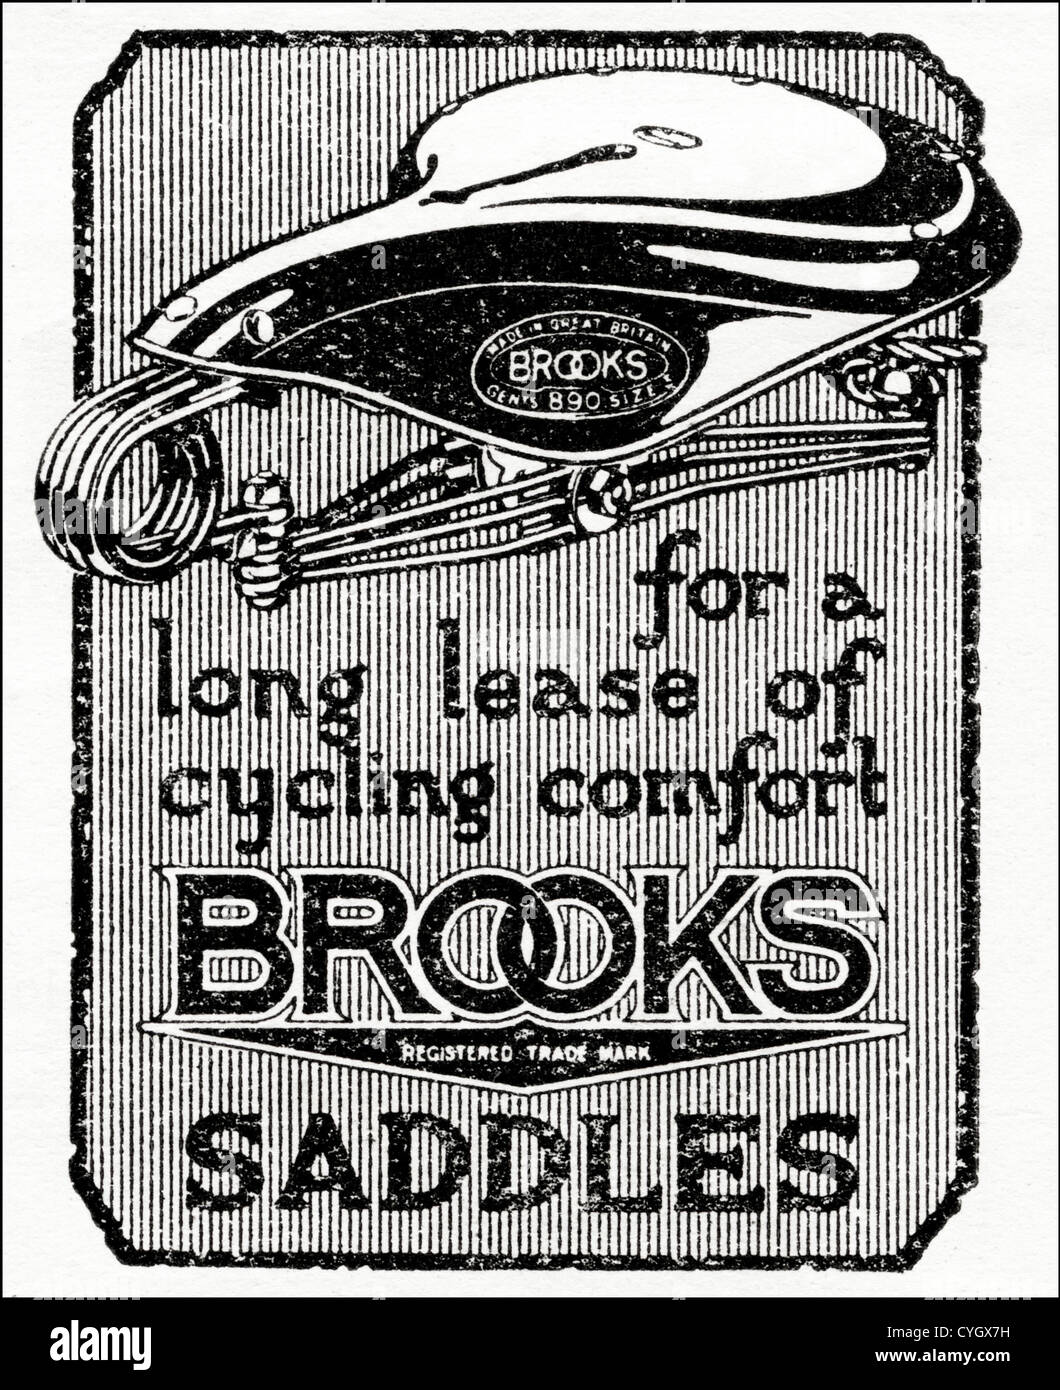 Original 1920s vintage print advertisement from English magazine advertising bicycle saddles by Brooks Stock Photo